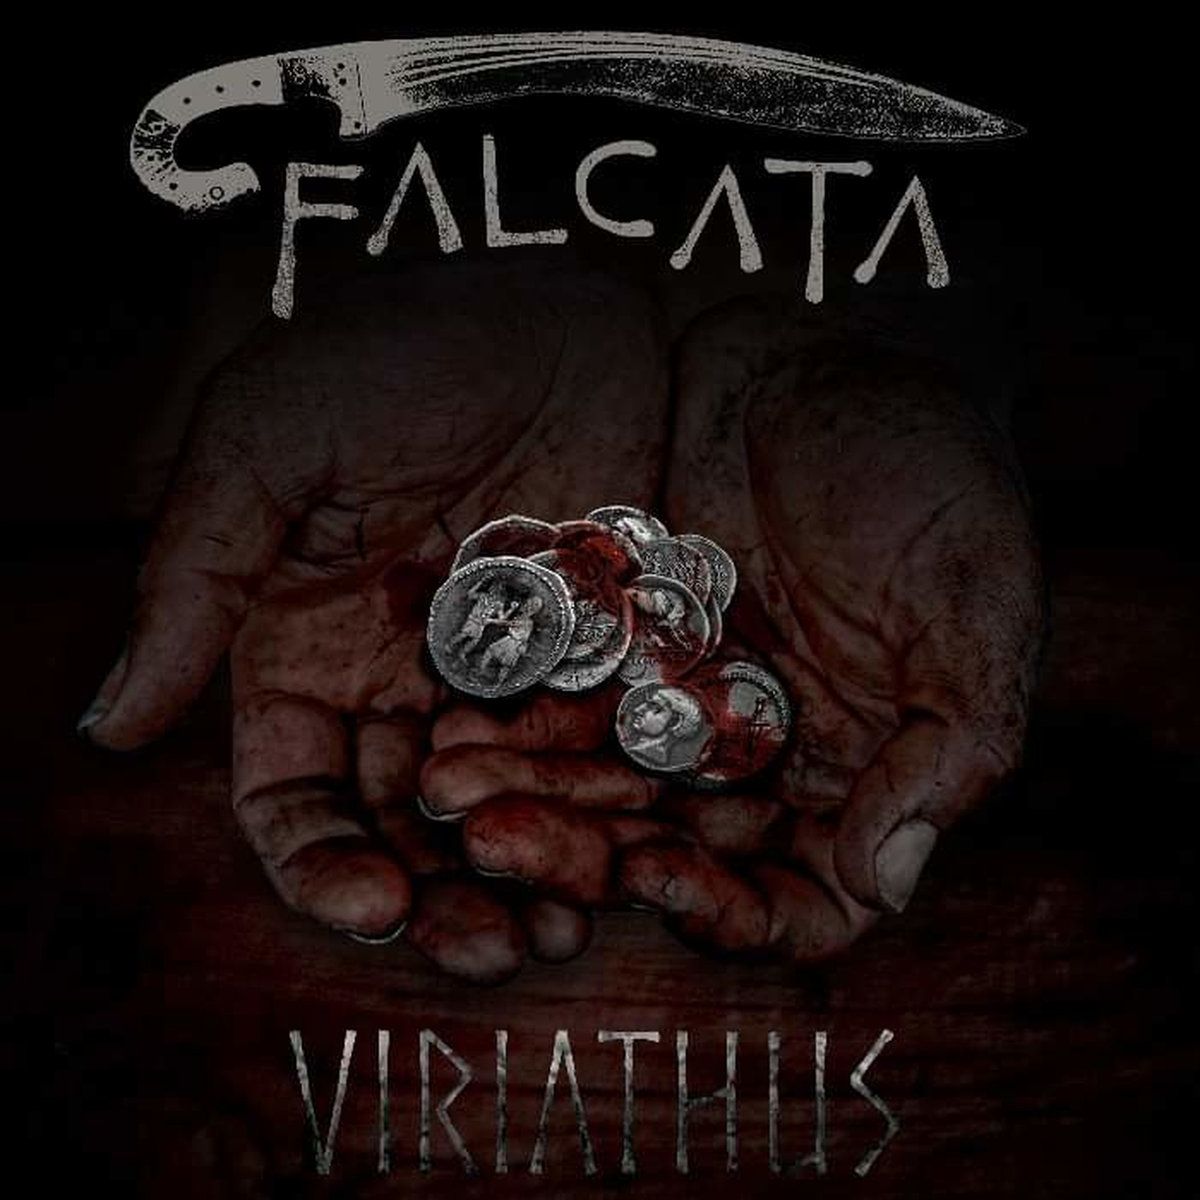 American Oi reviews Falcata's 'Viriathus' EP + 'The Early Years' CD
#OiPunk #SkinheadMusic
bit.ly/2SLoeyT